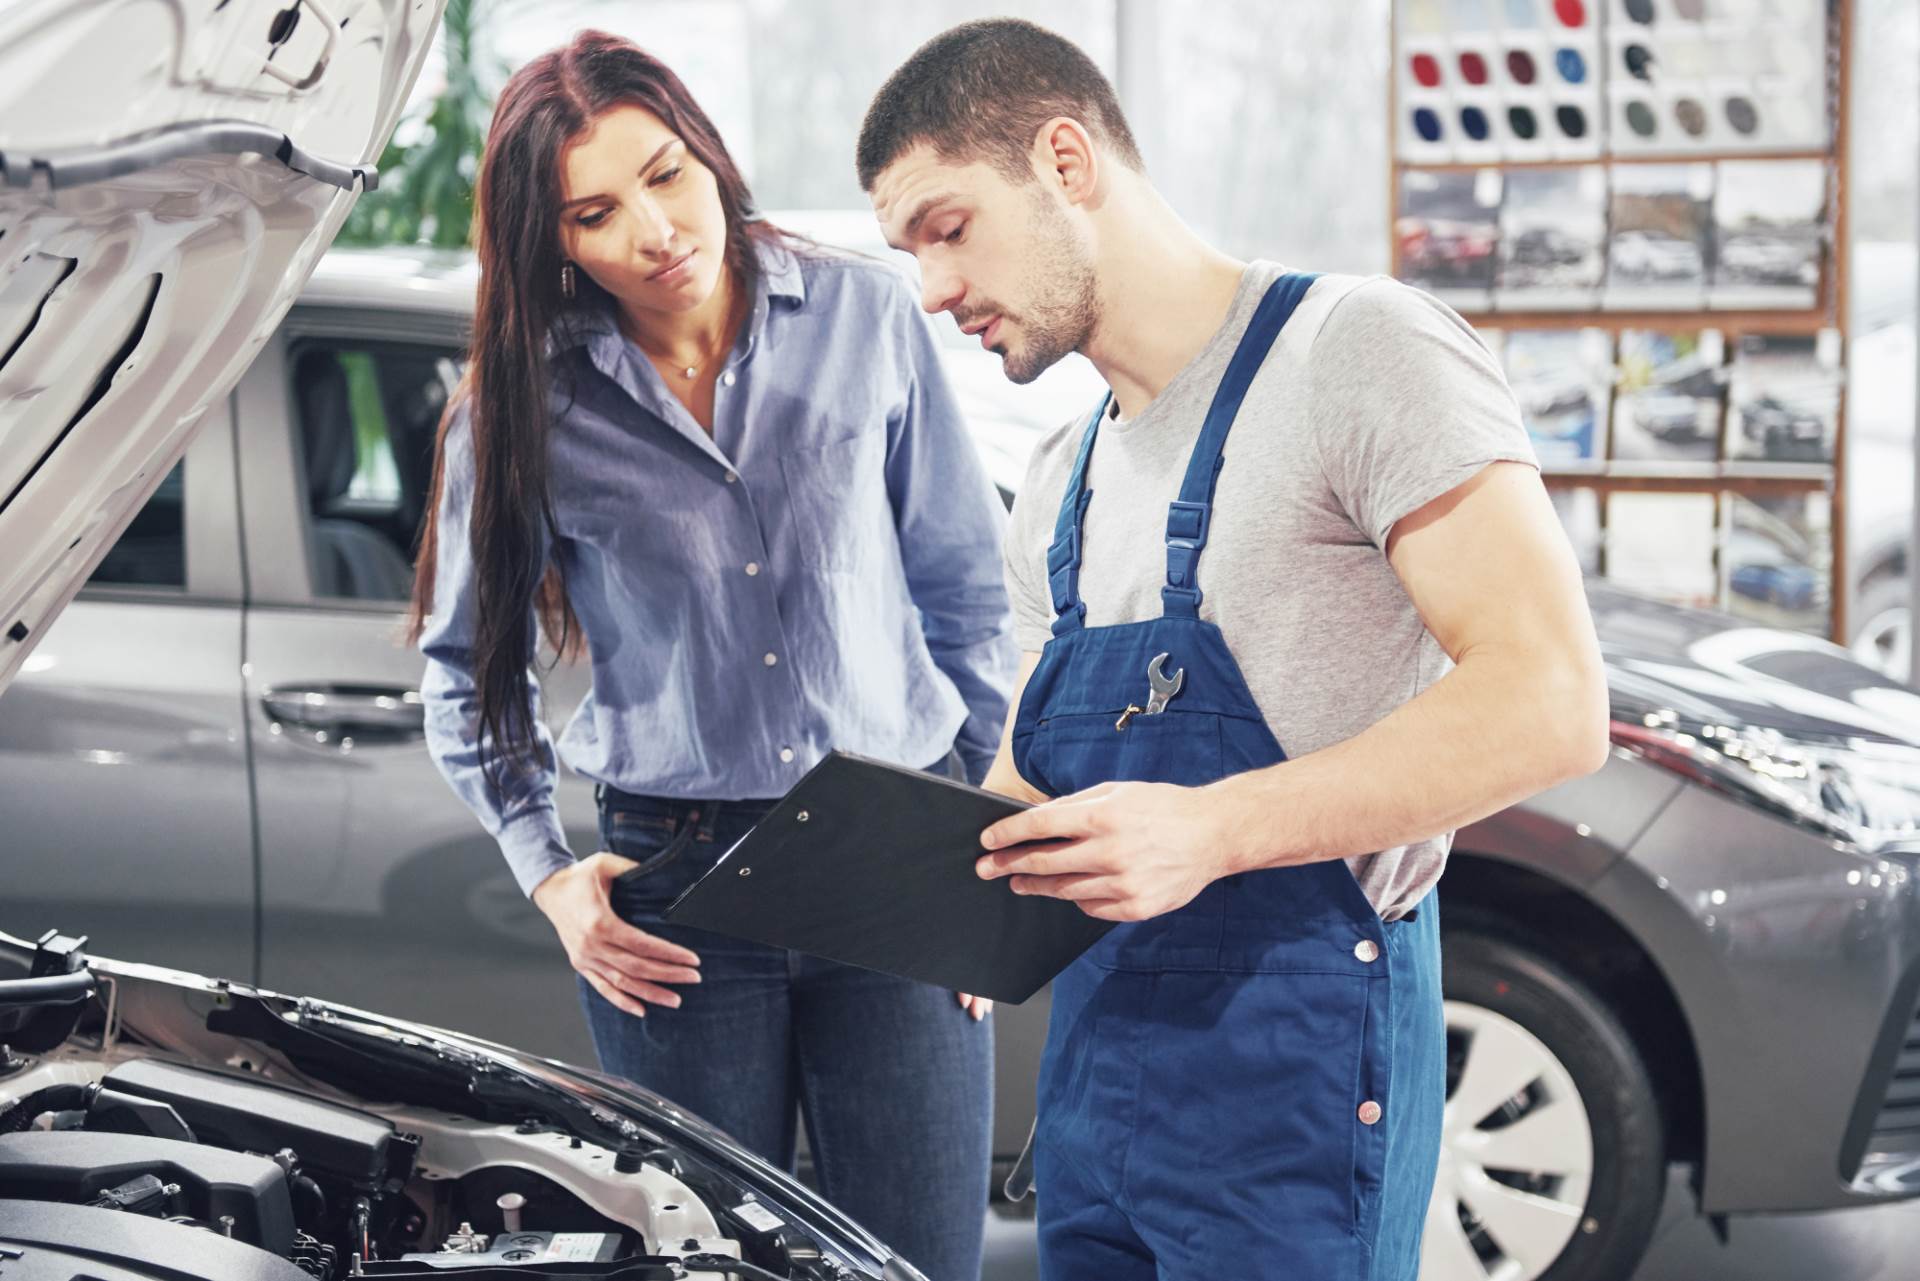 man-mechanic-woman-customer-discussing-repairs-done-her-vehicle